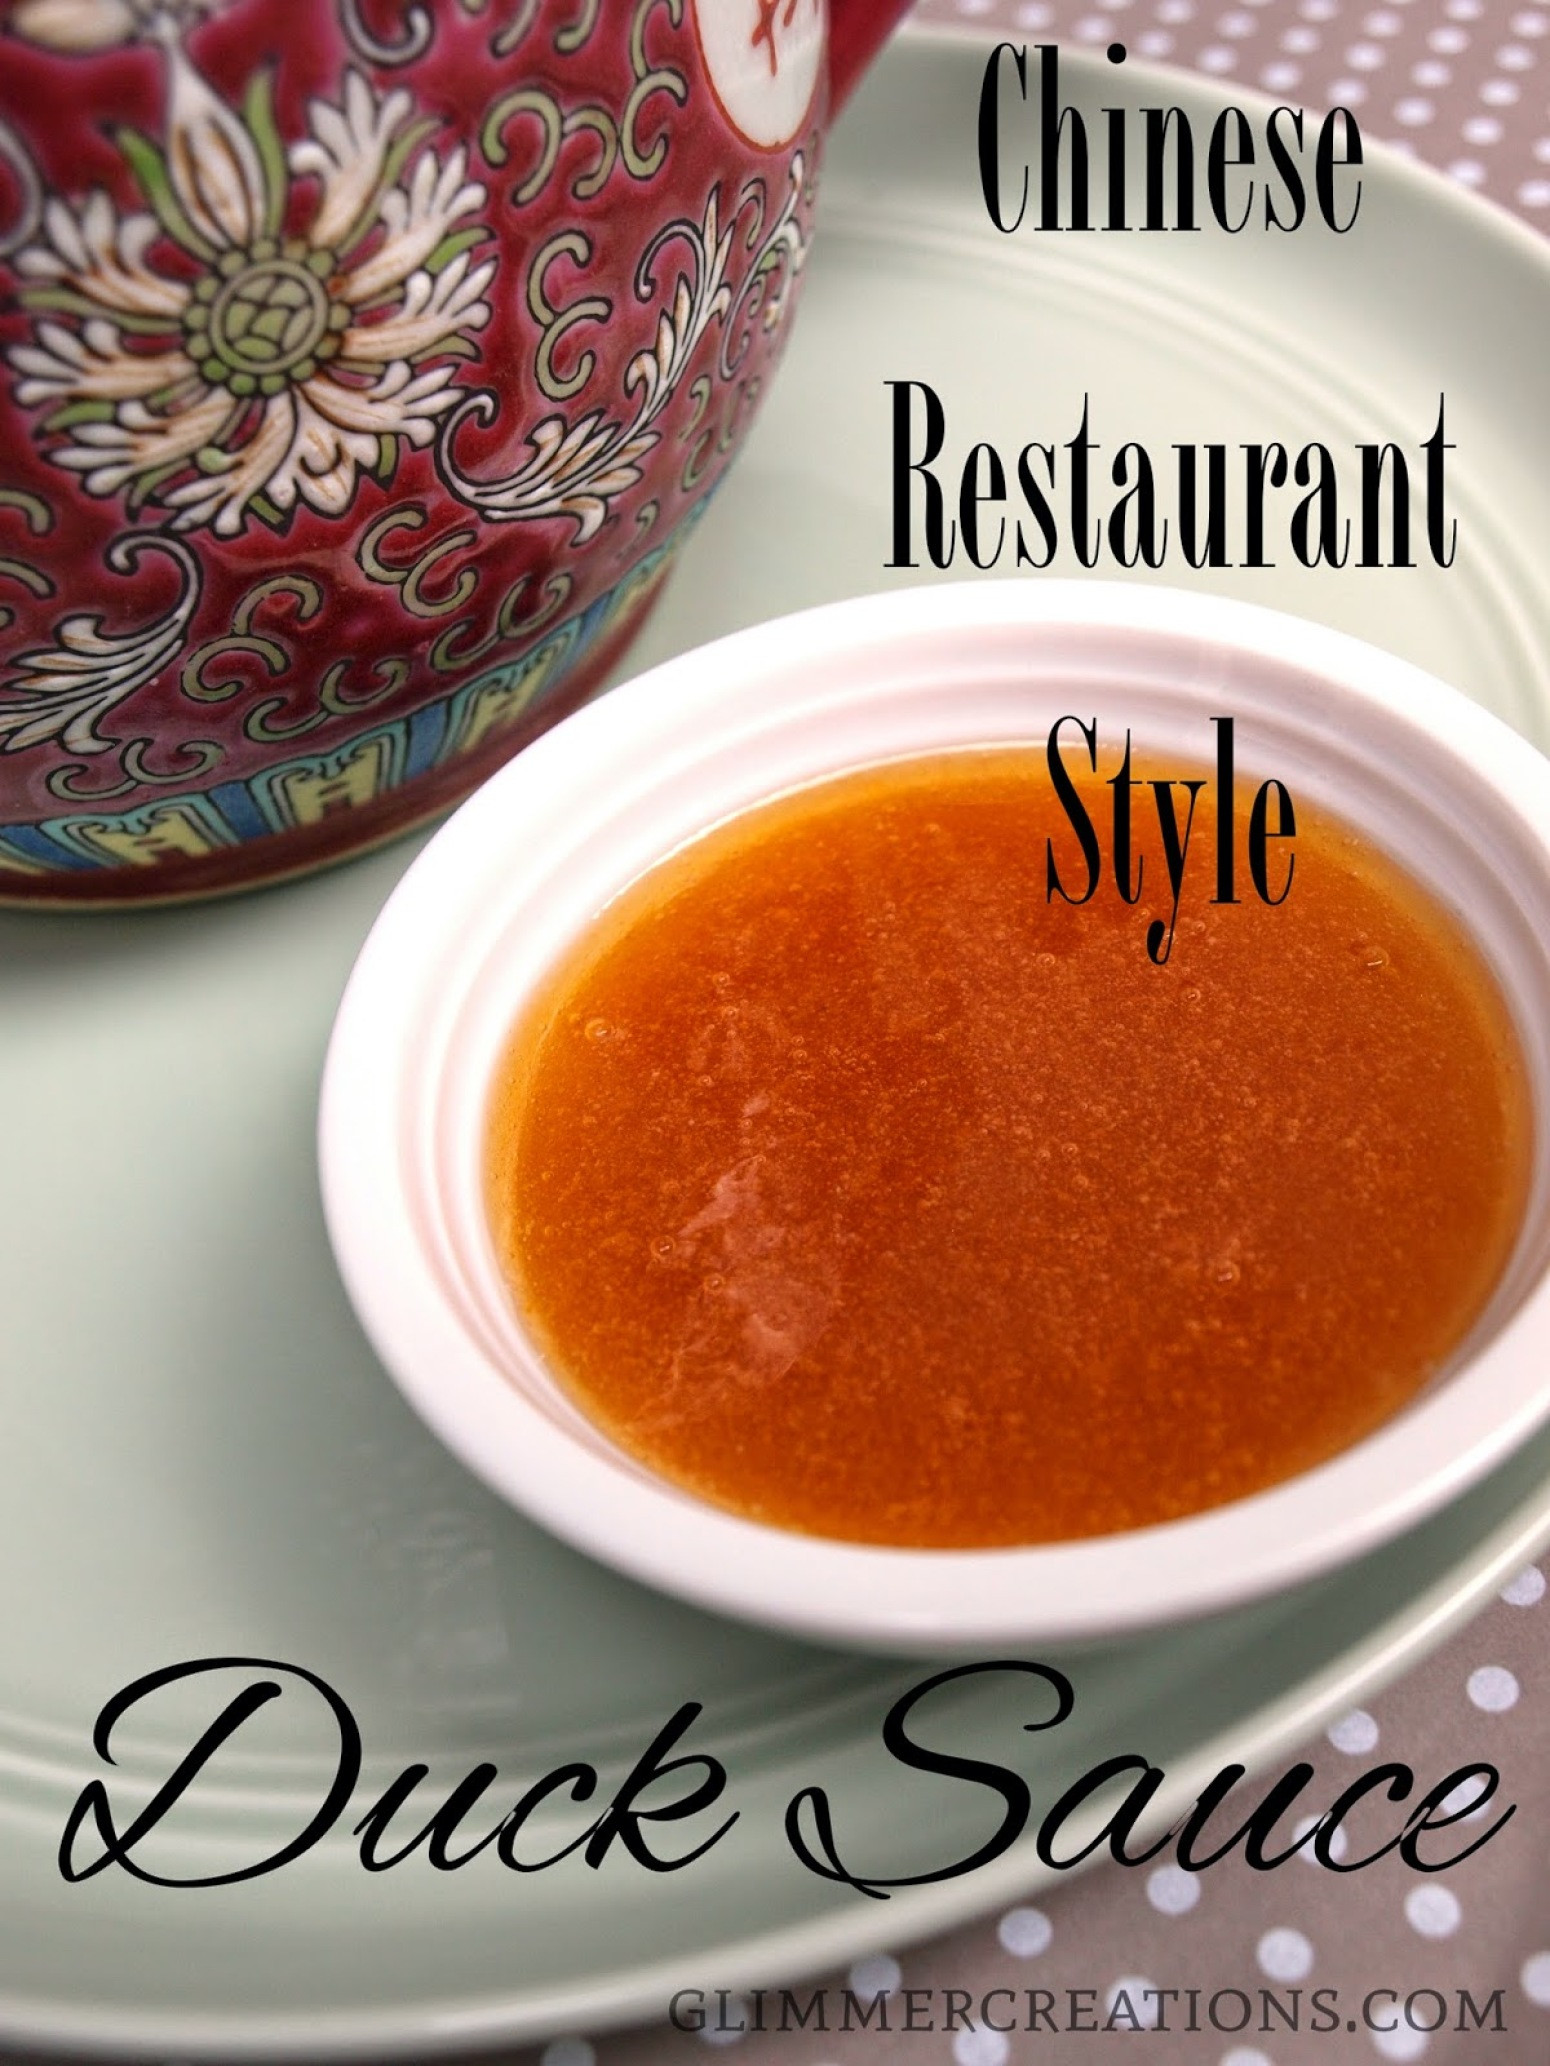 Asian Sauce Recipes
 Chinese RestaurantStyle Duck Sauce Recipe